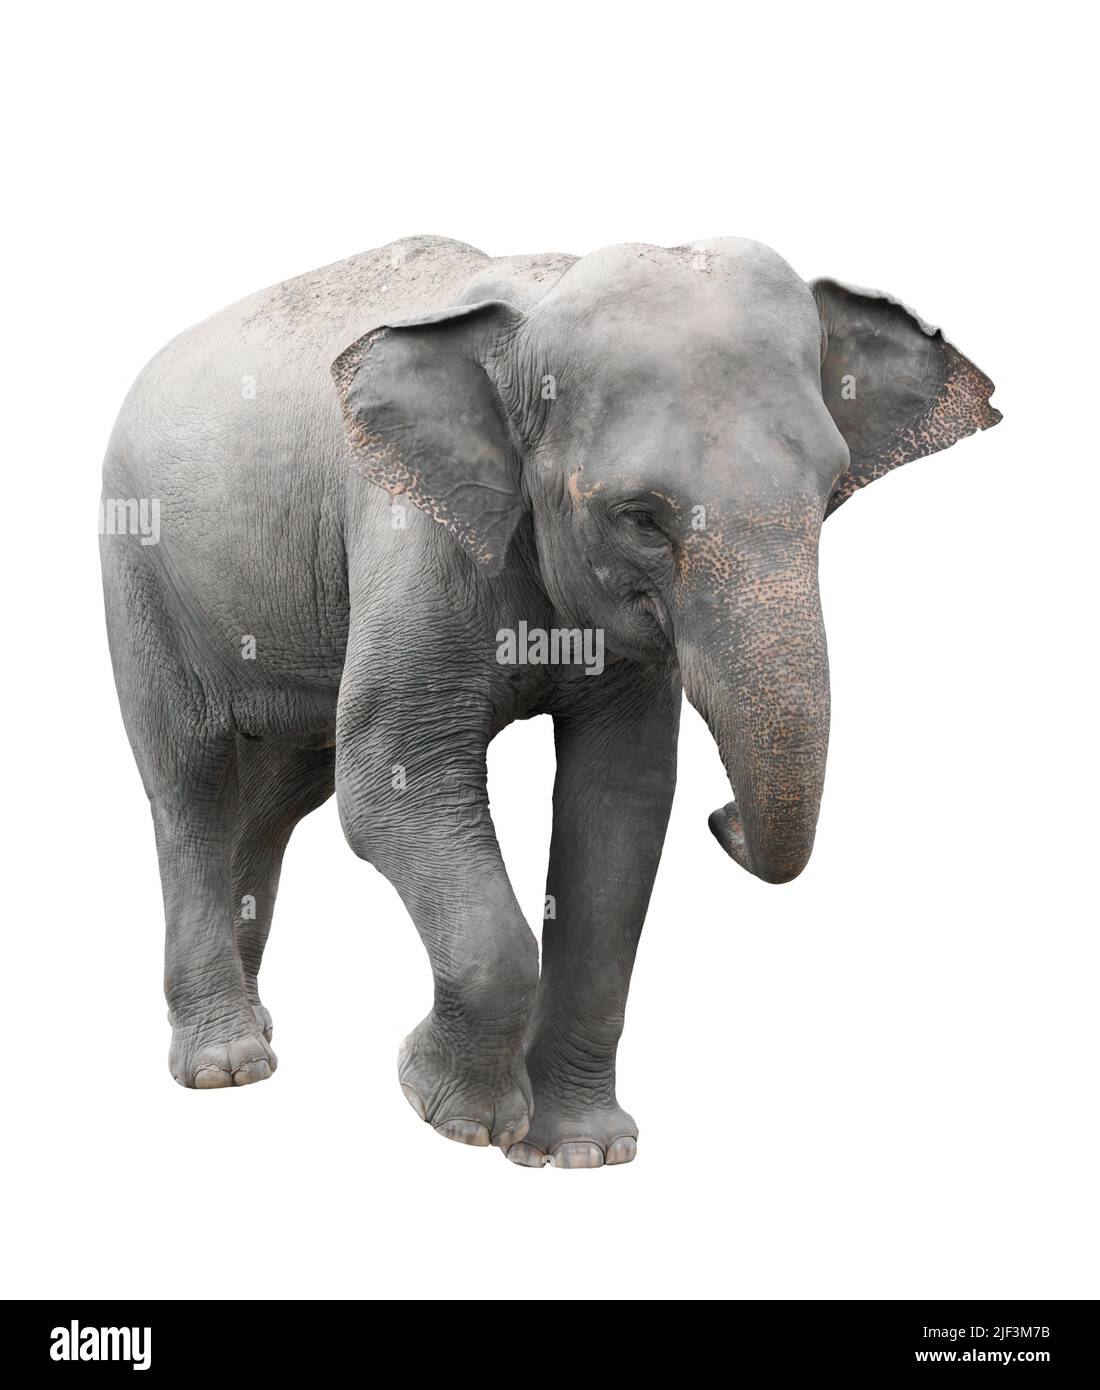 Elefante asiático aislado sobre fondo blanco. Foto de stock